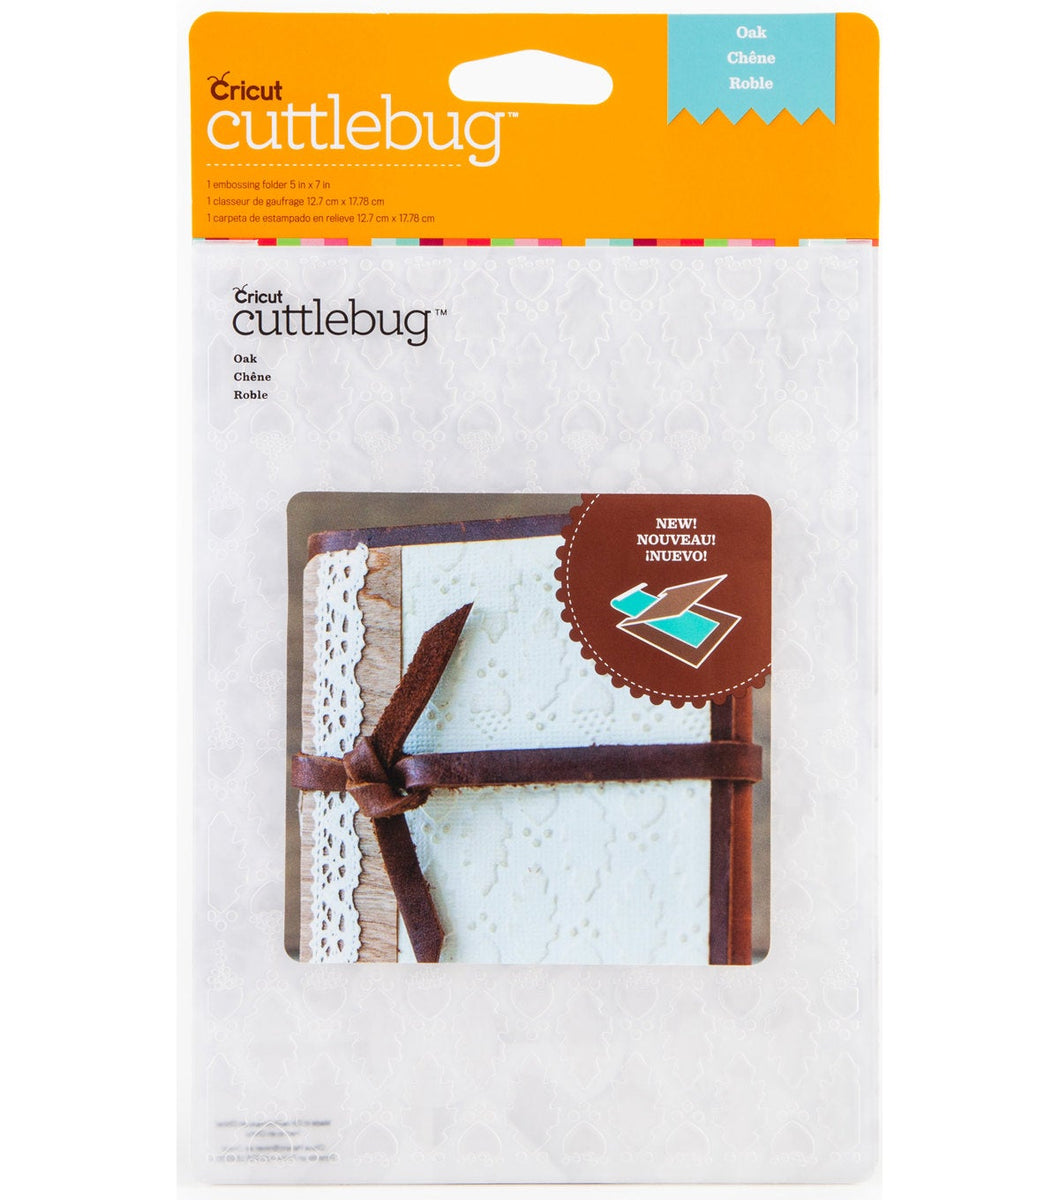 Cuttlebug 5X7 Embossing Folder-Polka Dots